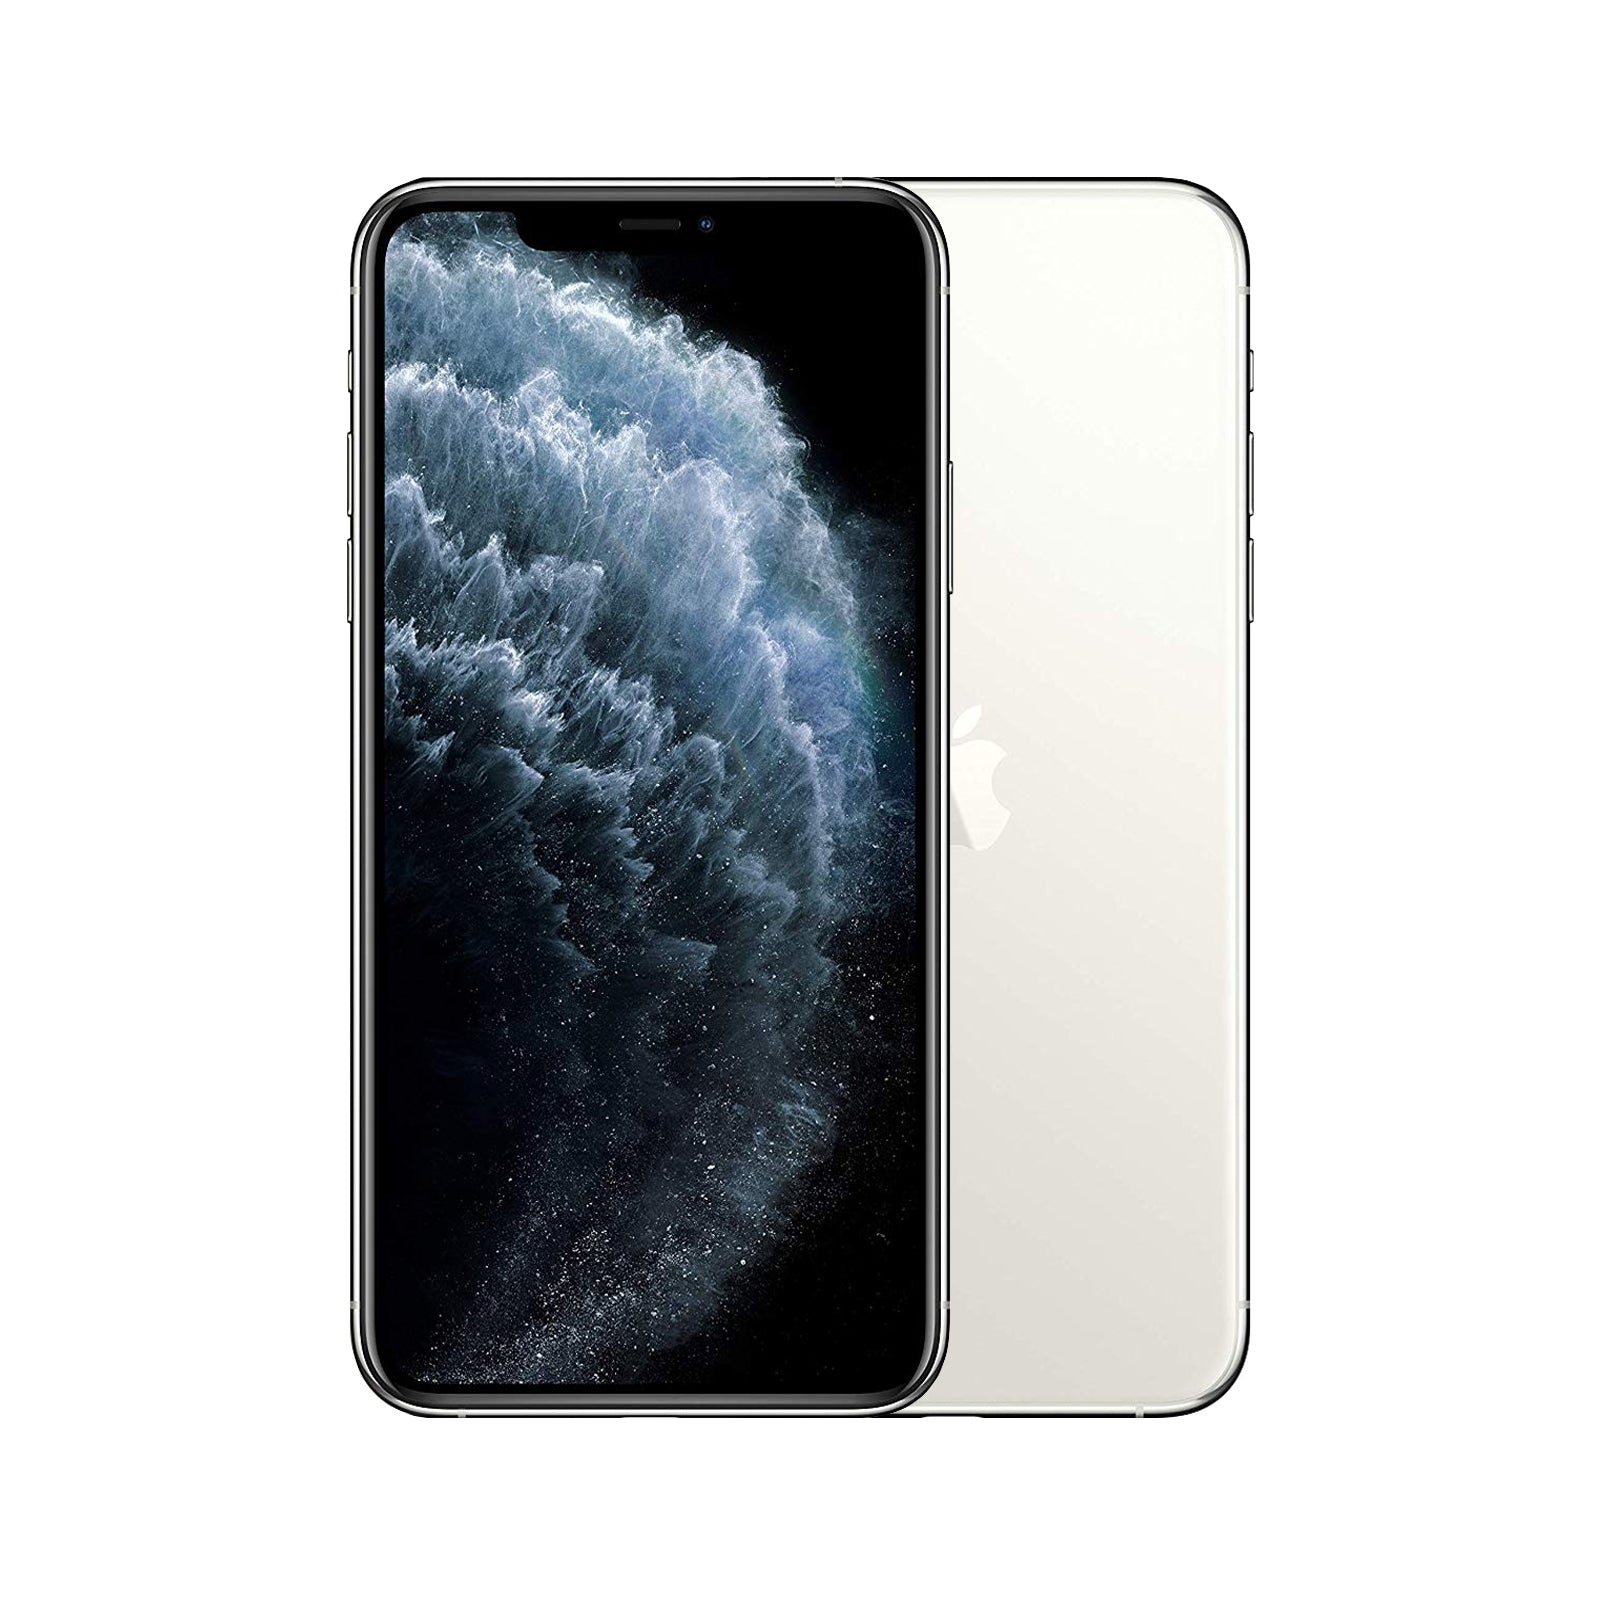 Apple iPhone 11 Pro 64GB Silver - Very Good - Refurbished